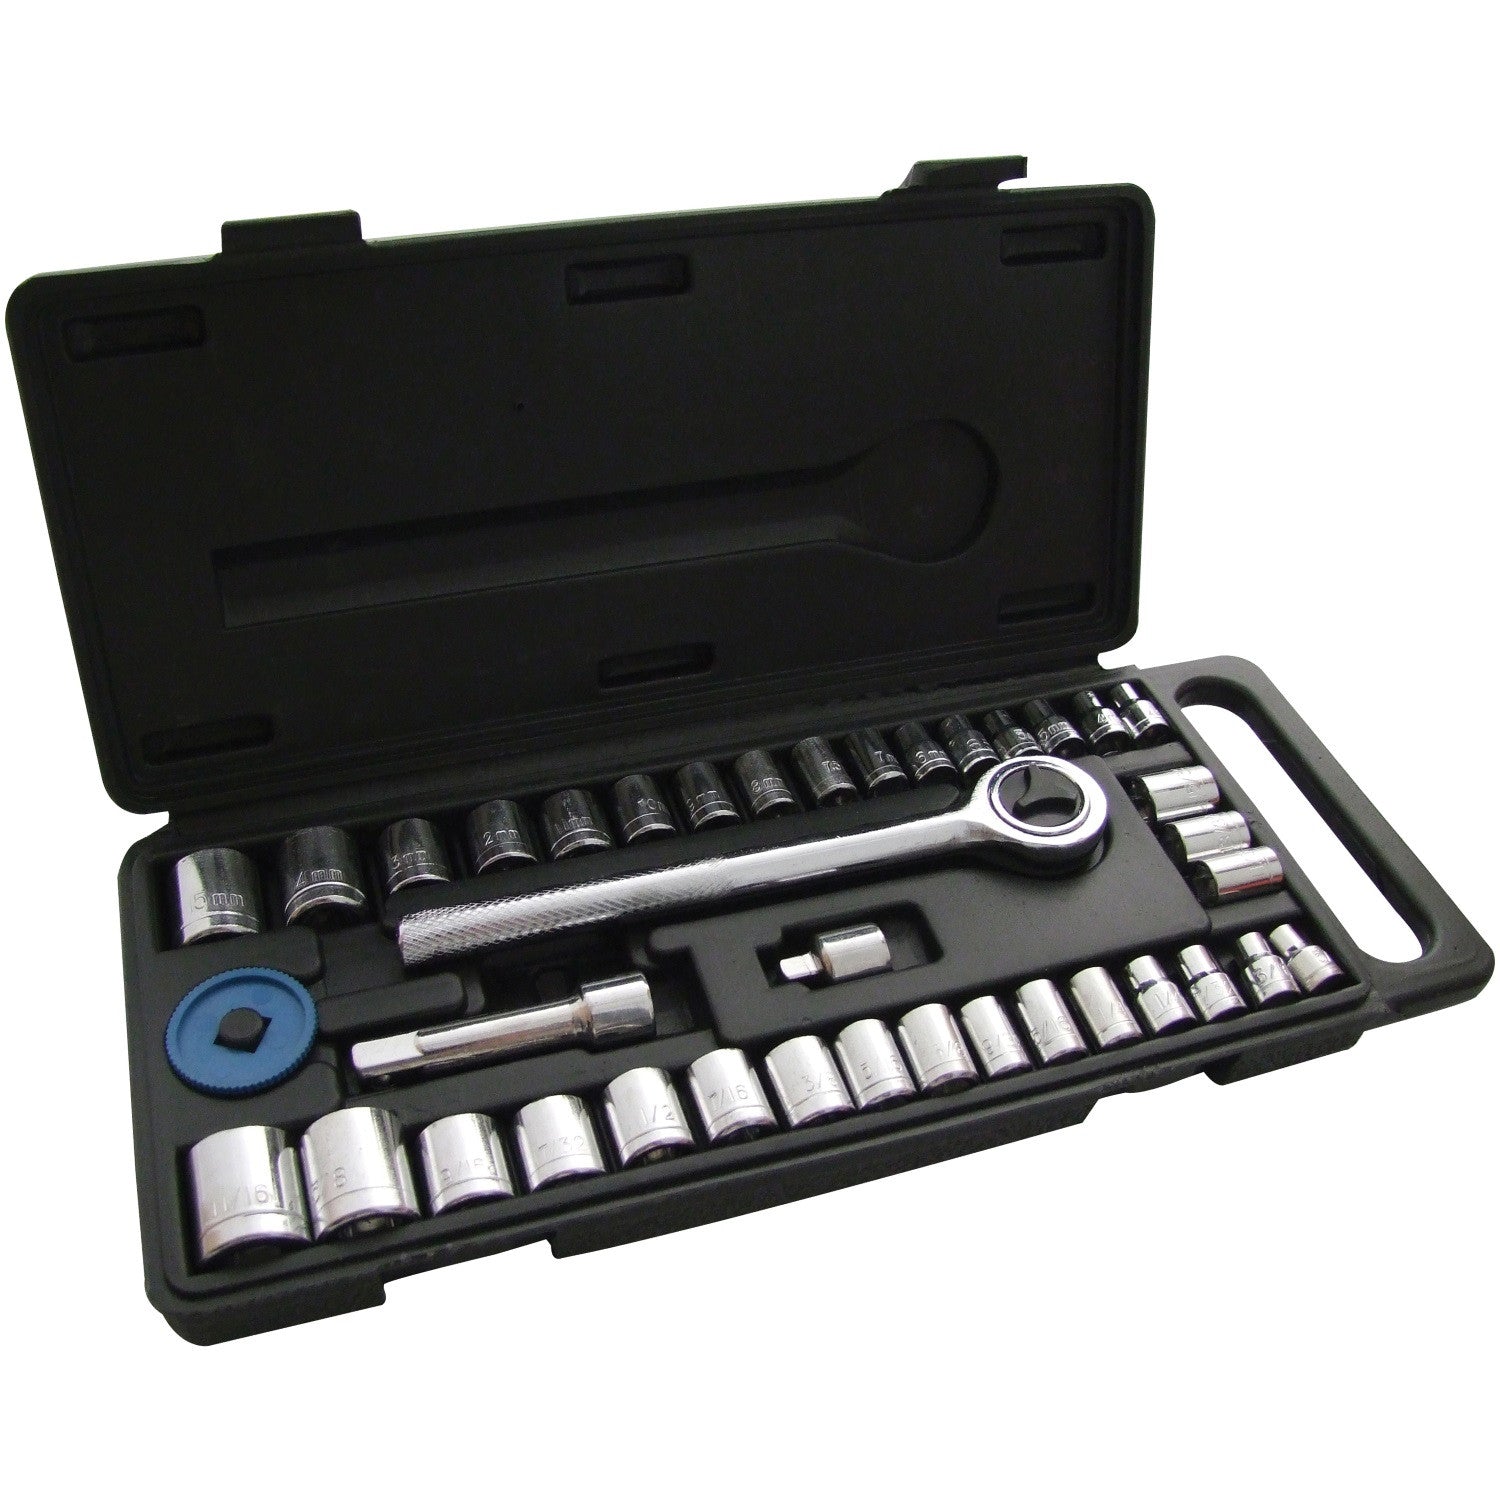 Amtech I0100 Socket Set 40Pce - Premium 3/8" drive Sockets from DK Tools - Just $7.8! Shop now at W Hurst & Son (IW) Ltd